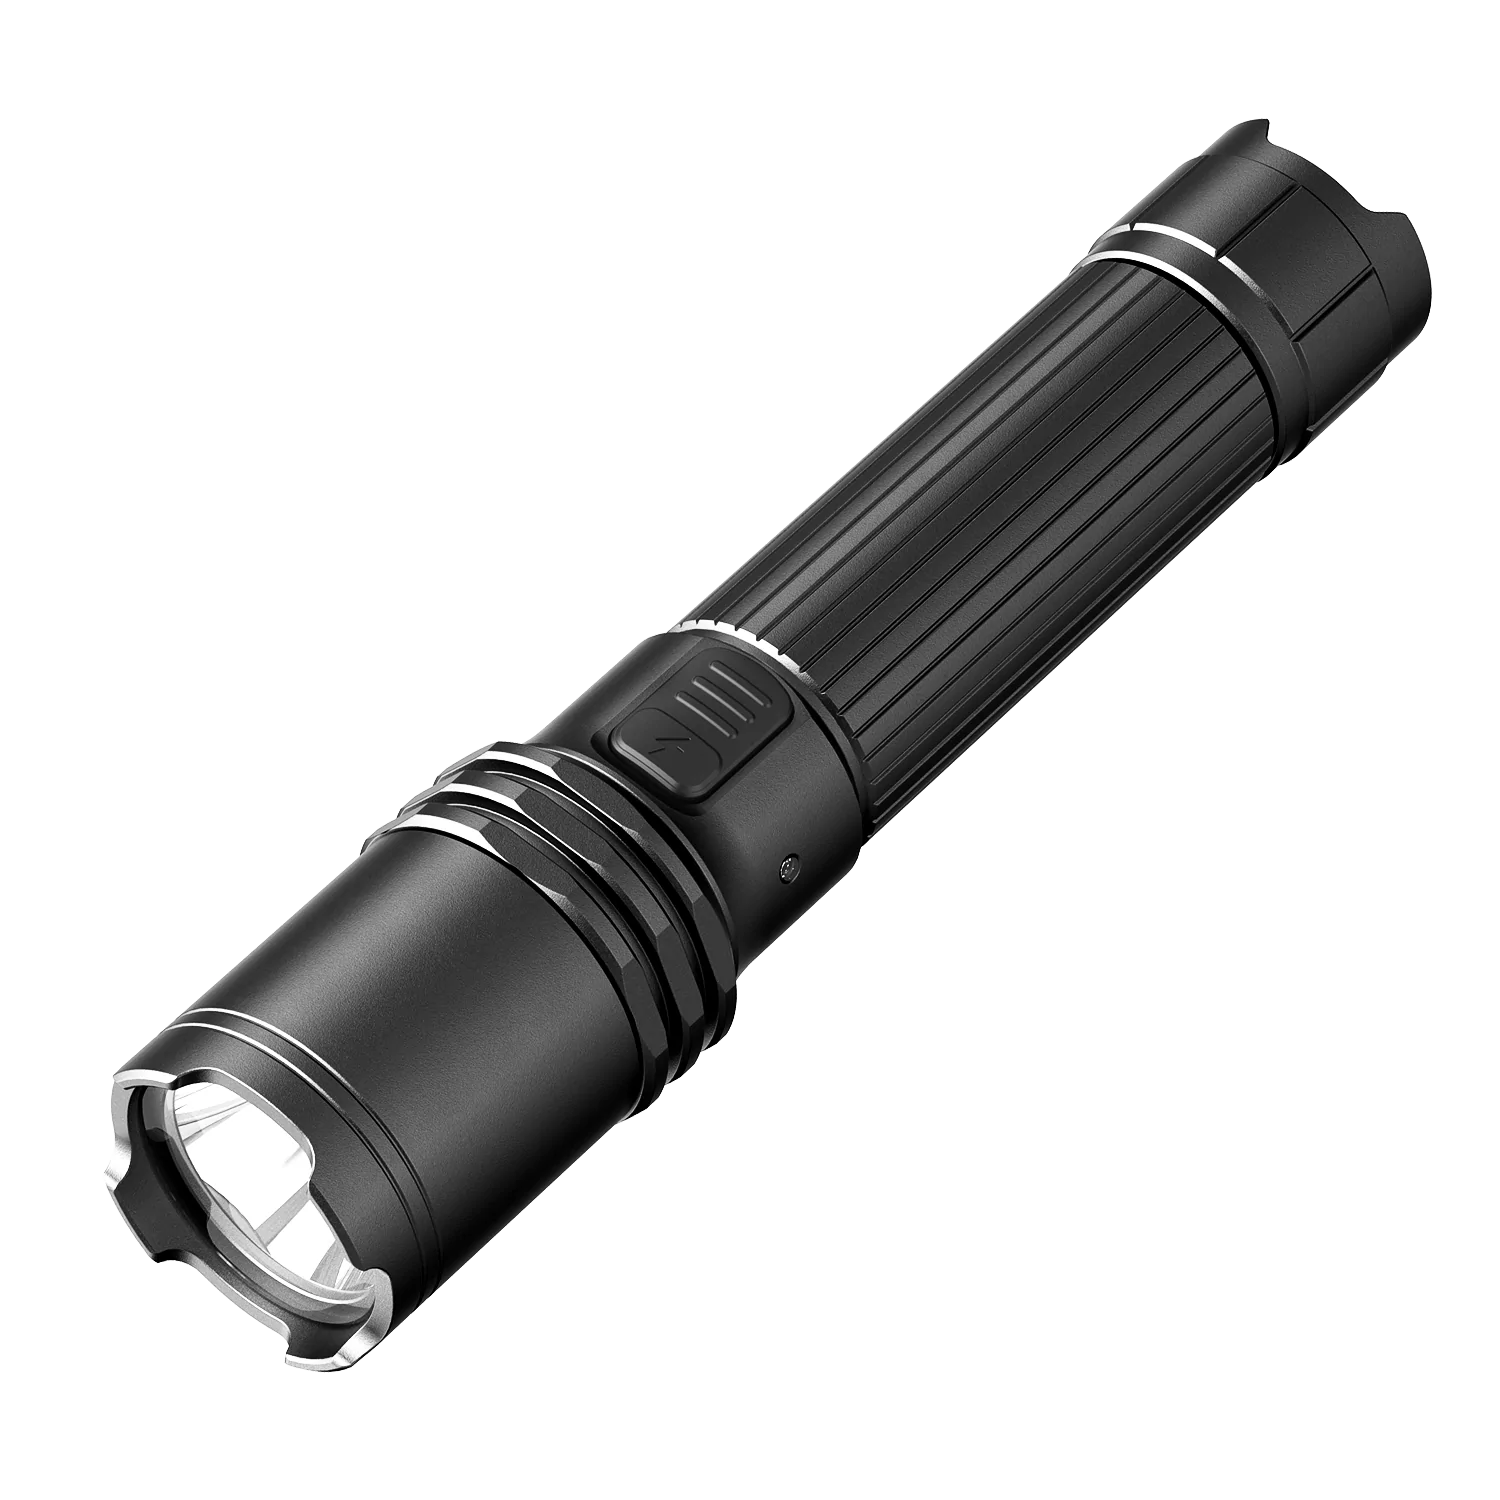 Klarus A1 Pro -XP-L2 LED 1300 Lumens Extreme Output Flashlight